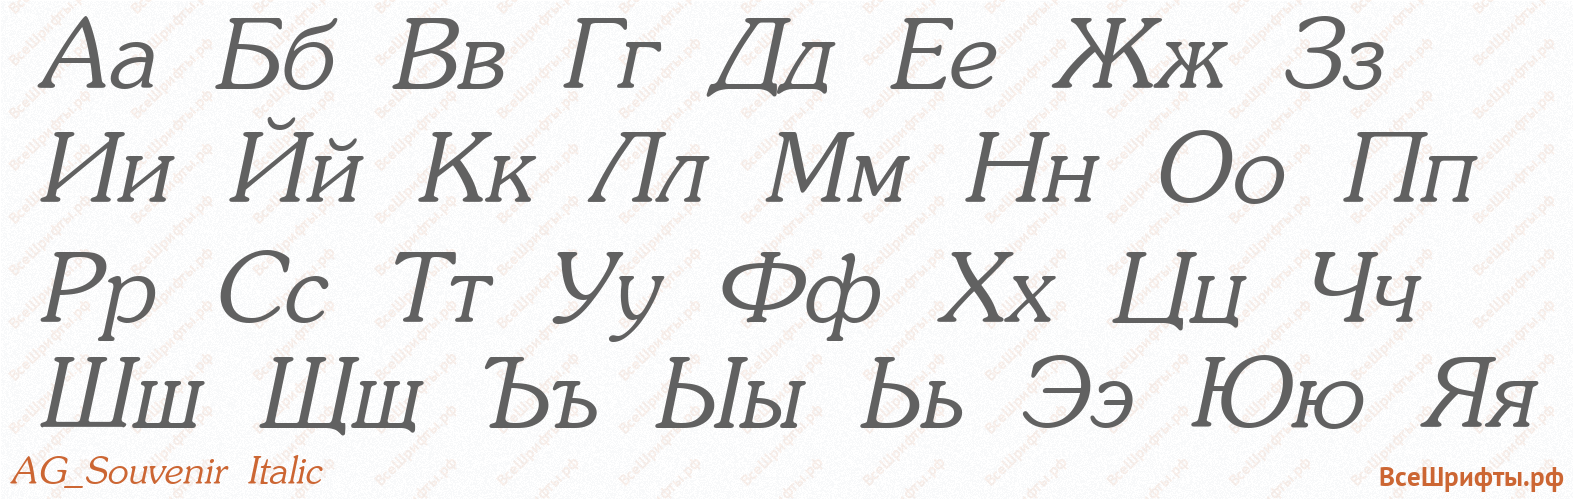 Шрифт AG_Souvenir Italic с русскими буквами